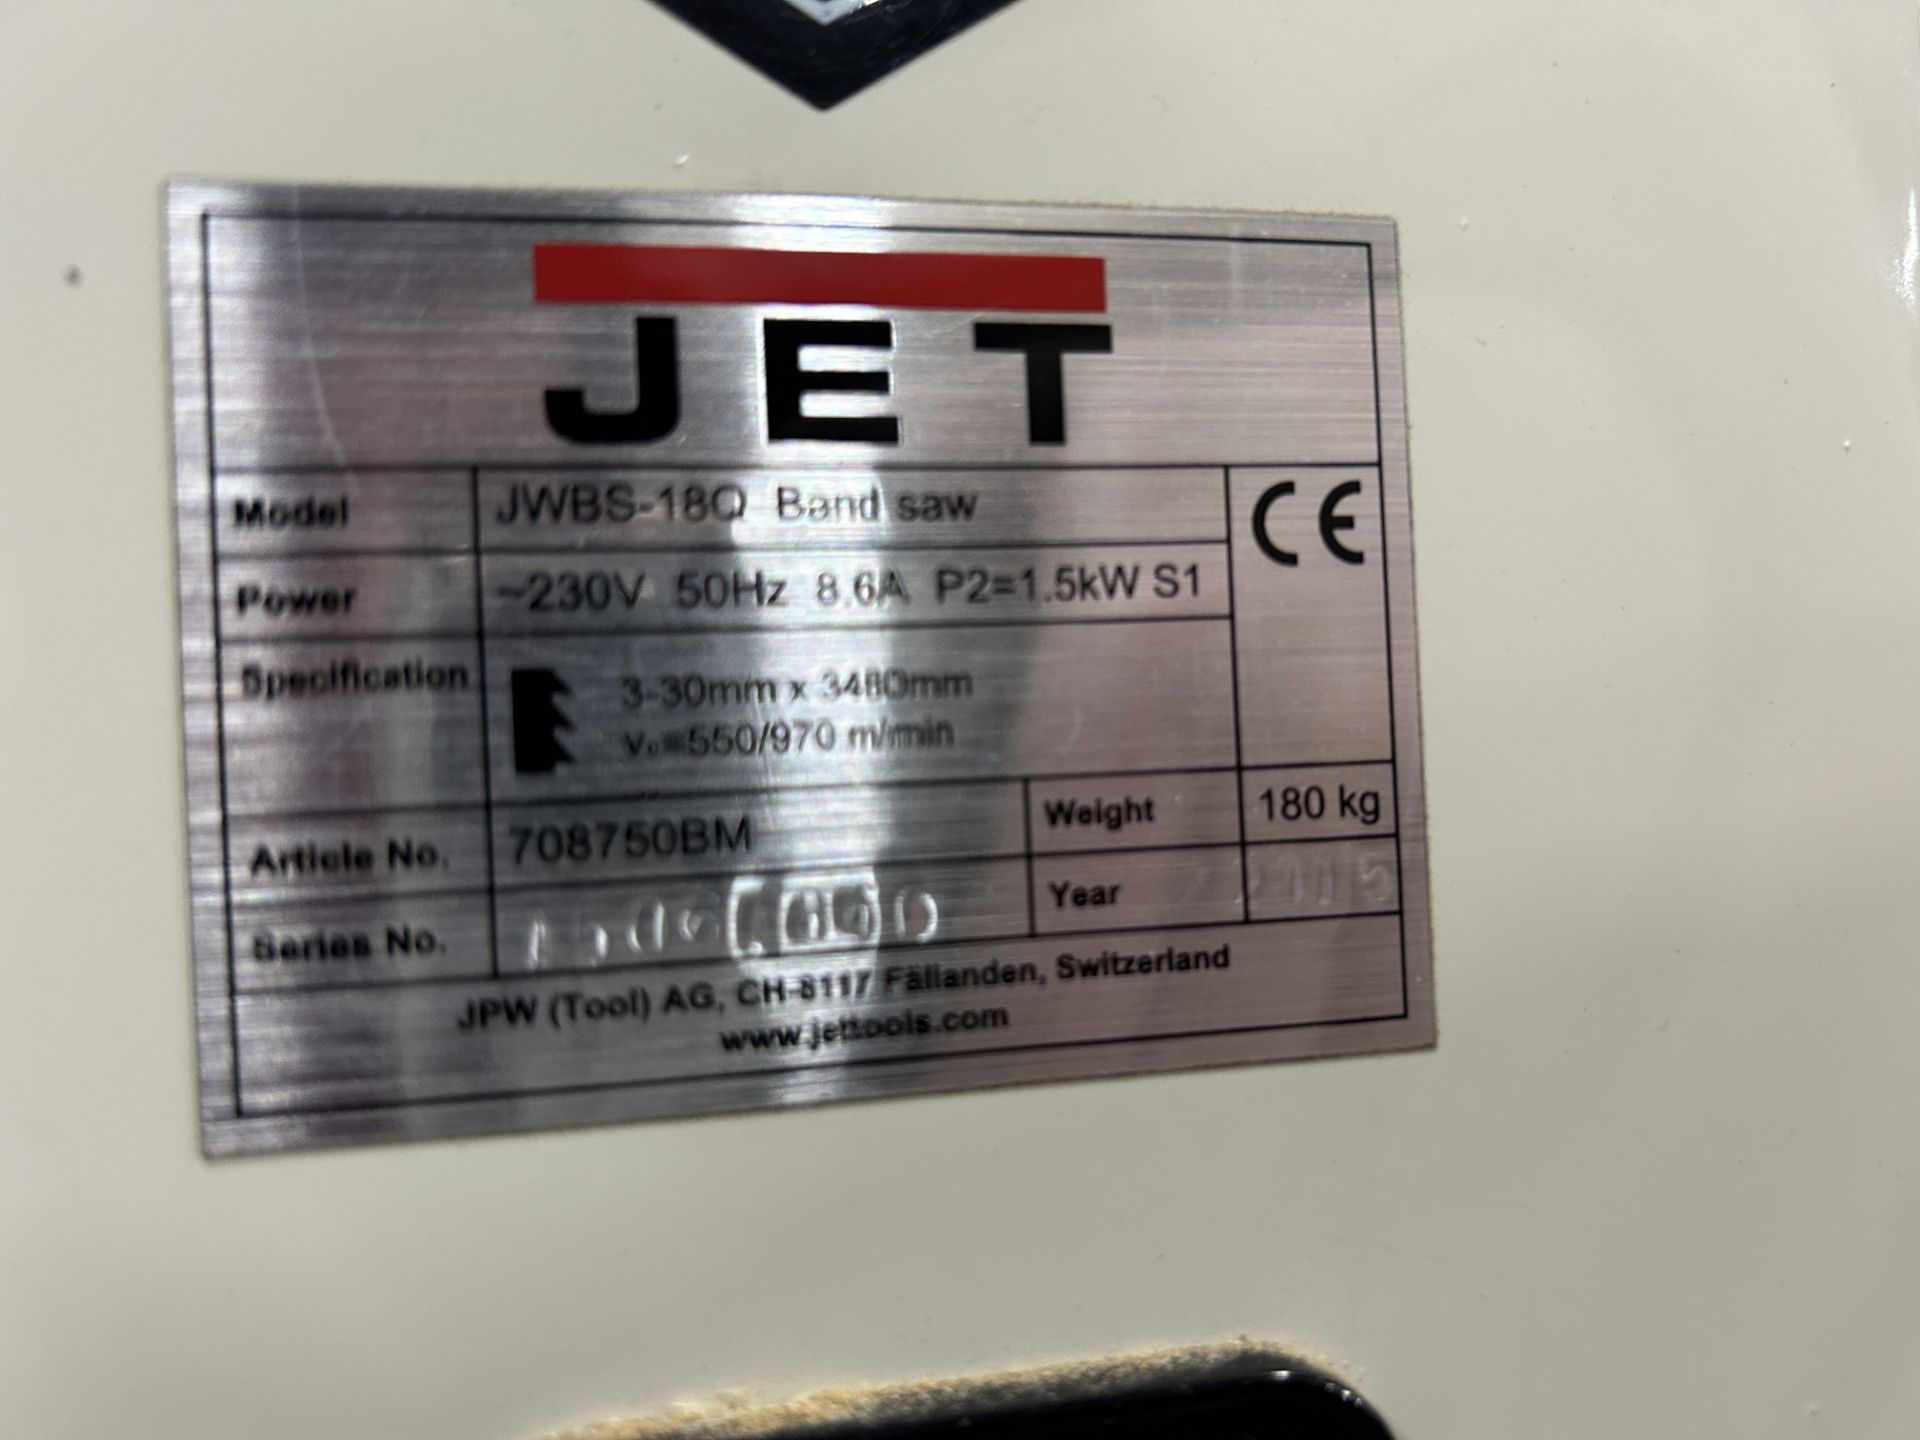 Jet JWBS18Q bandsaw - Image 2 of 2